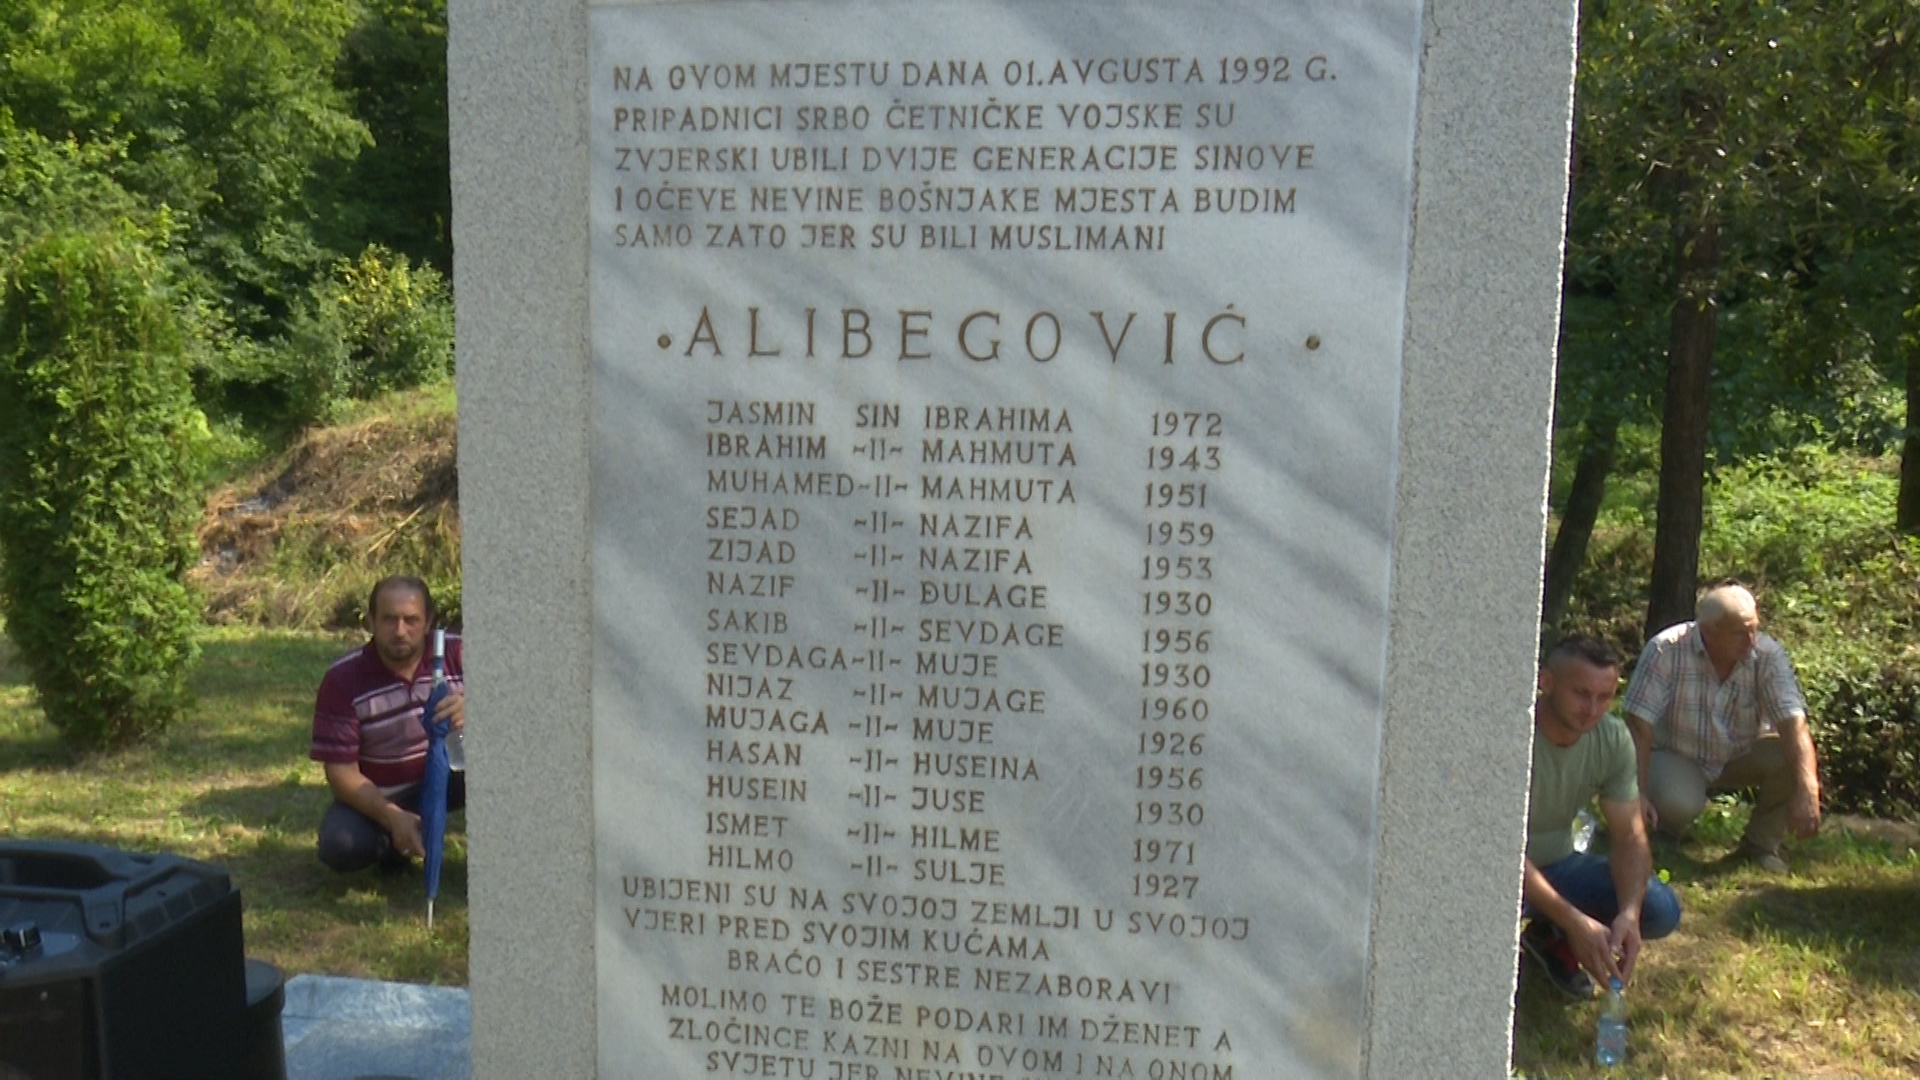 Zločin nad porodicom Alibegović nikad zaboraviti